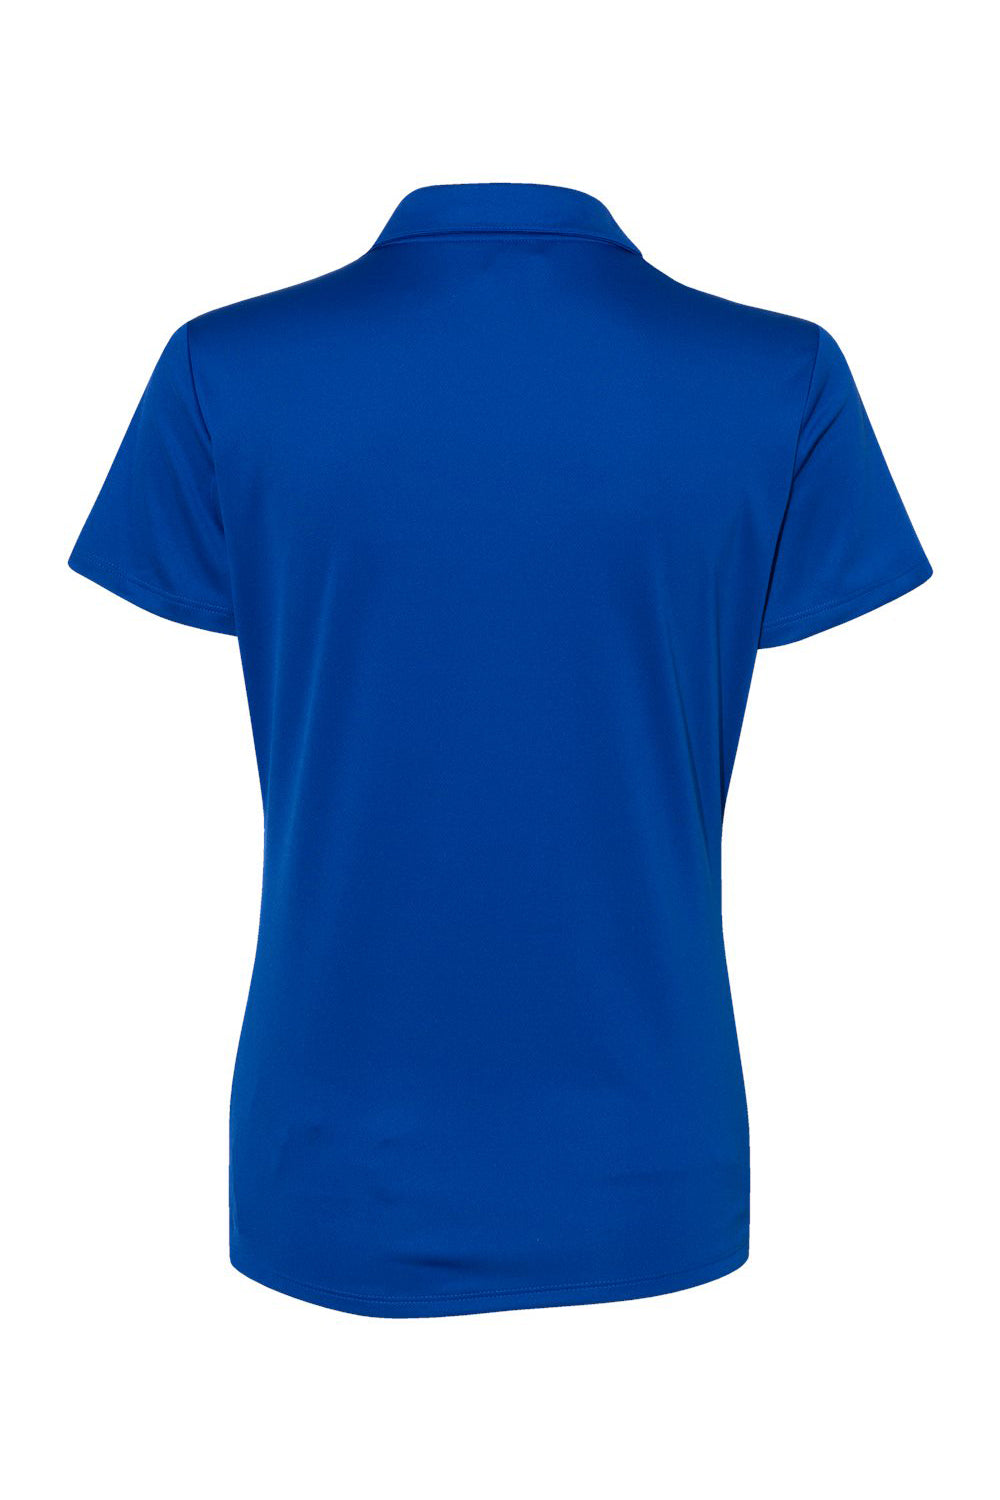 Adidas A231 Womens Performance Short Sleeve Polo Shirt Collegiate Royal Blue Flat Back